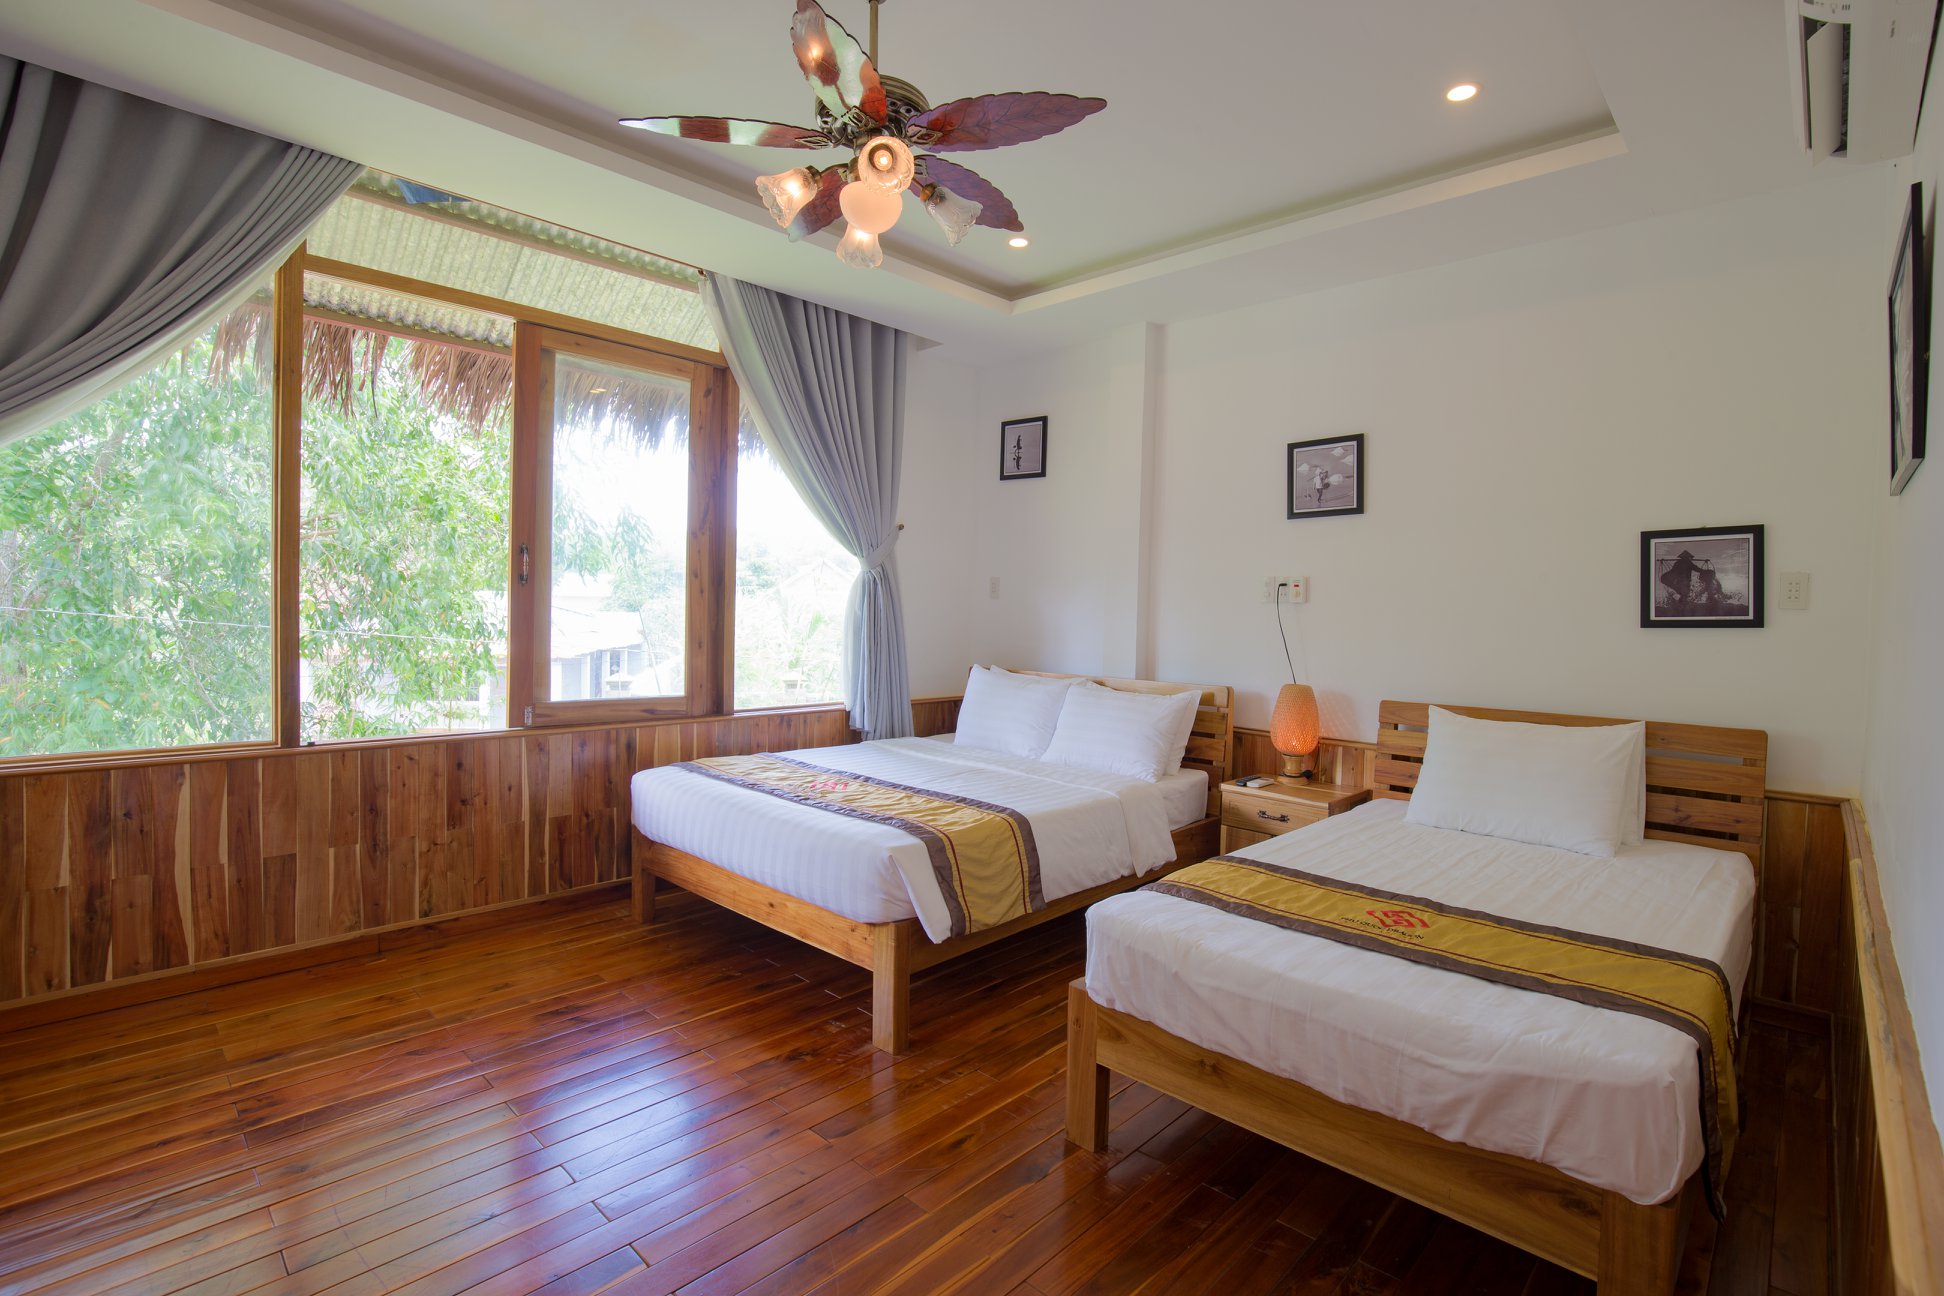 Review từ A - Z về Phu Quoc Dragon Resort & Spa